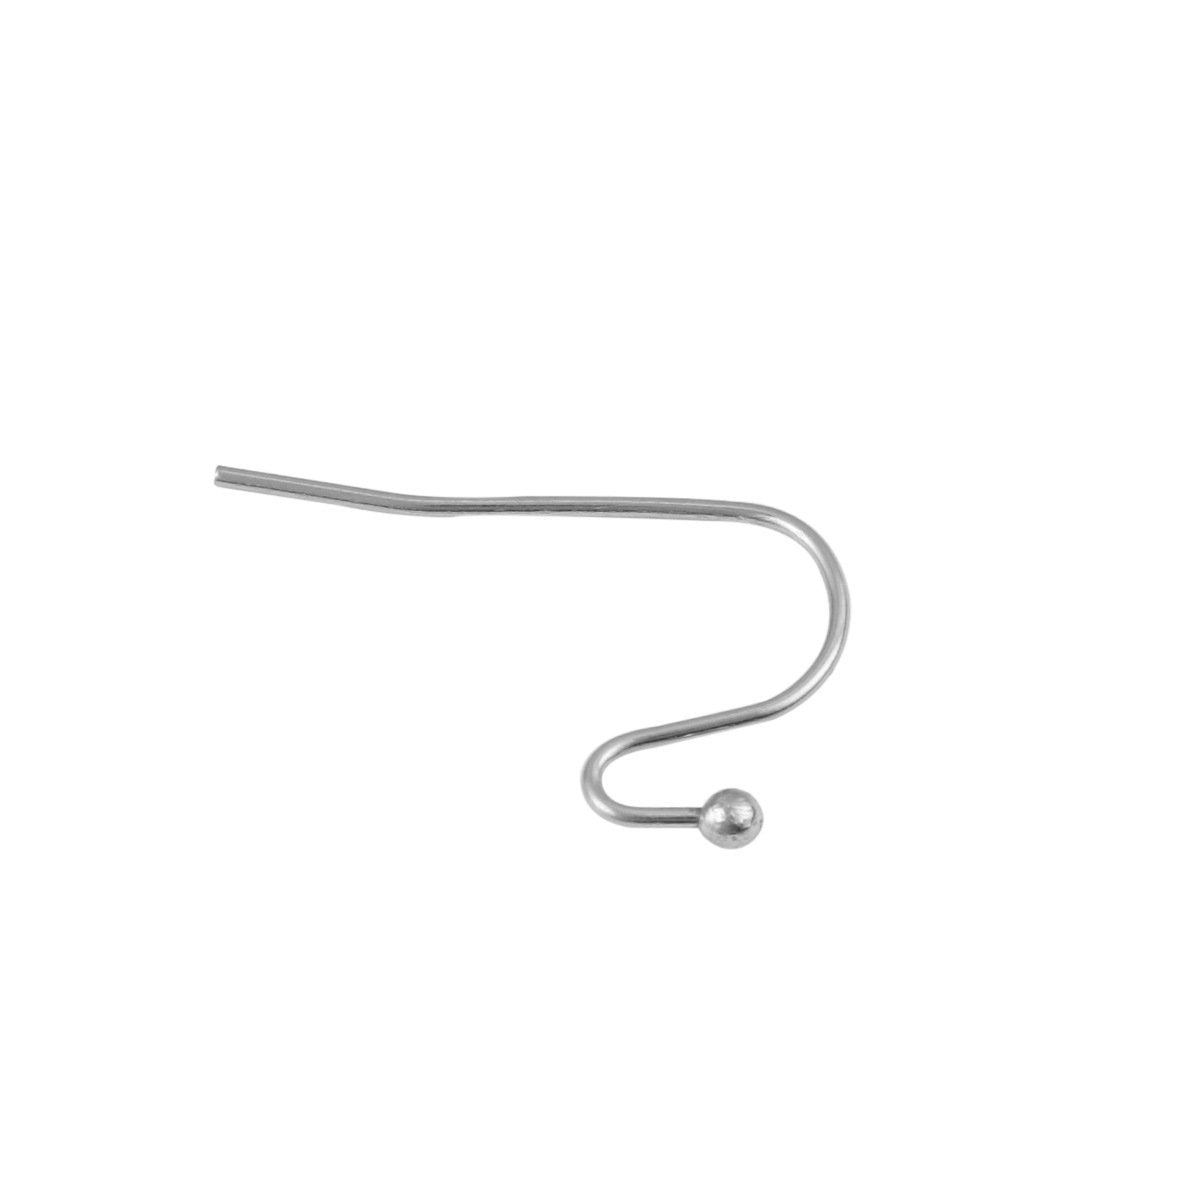 Nickel free stainless steel minimalist earring hooks 50 pcs (25 pairs)